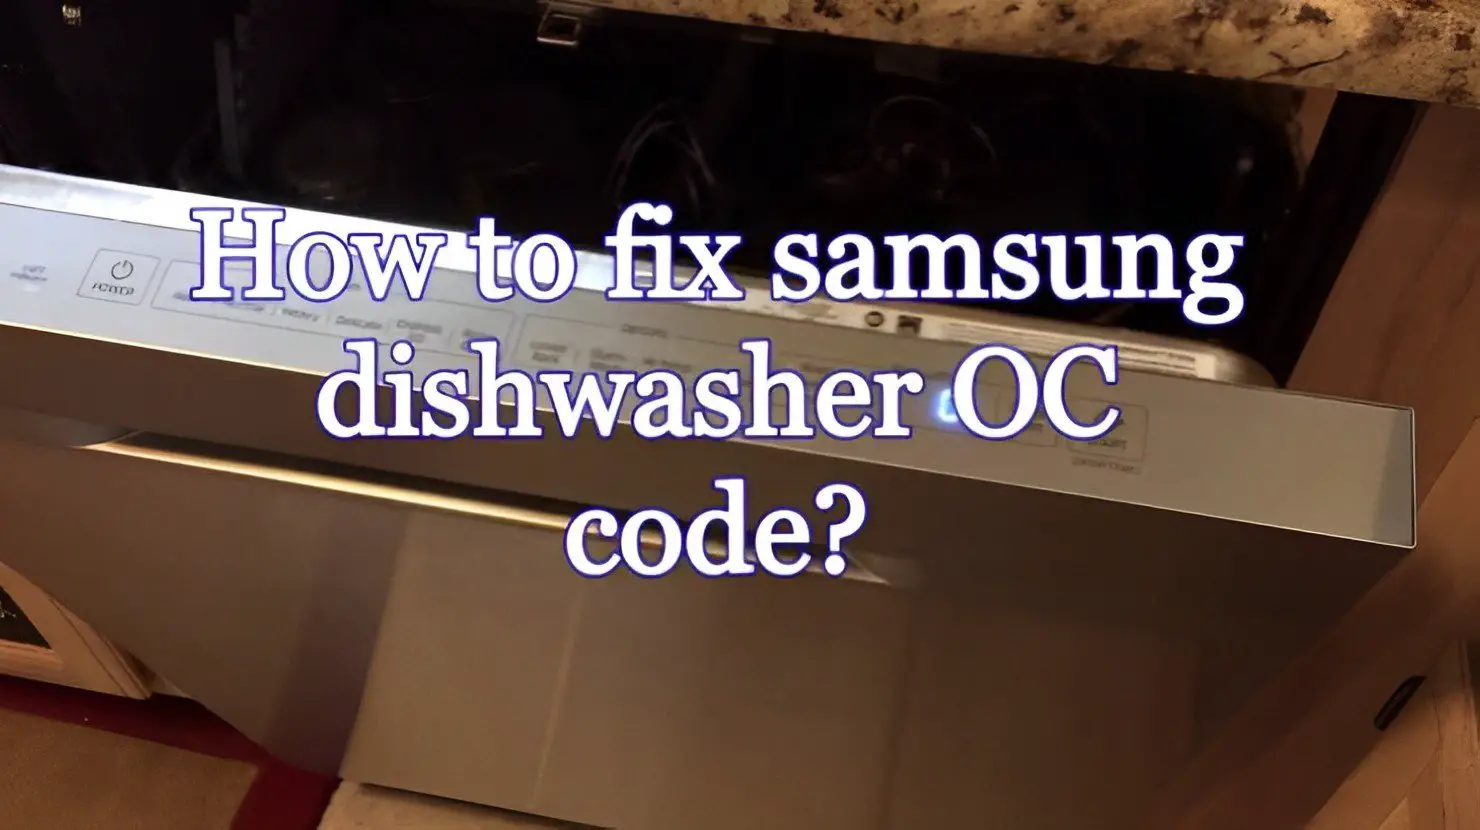 samsung dishwasher oc code